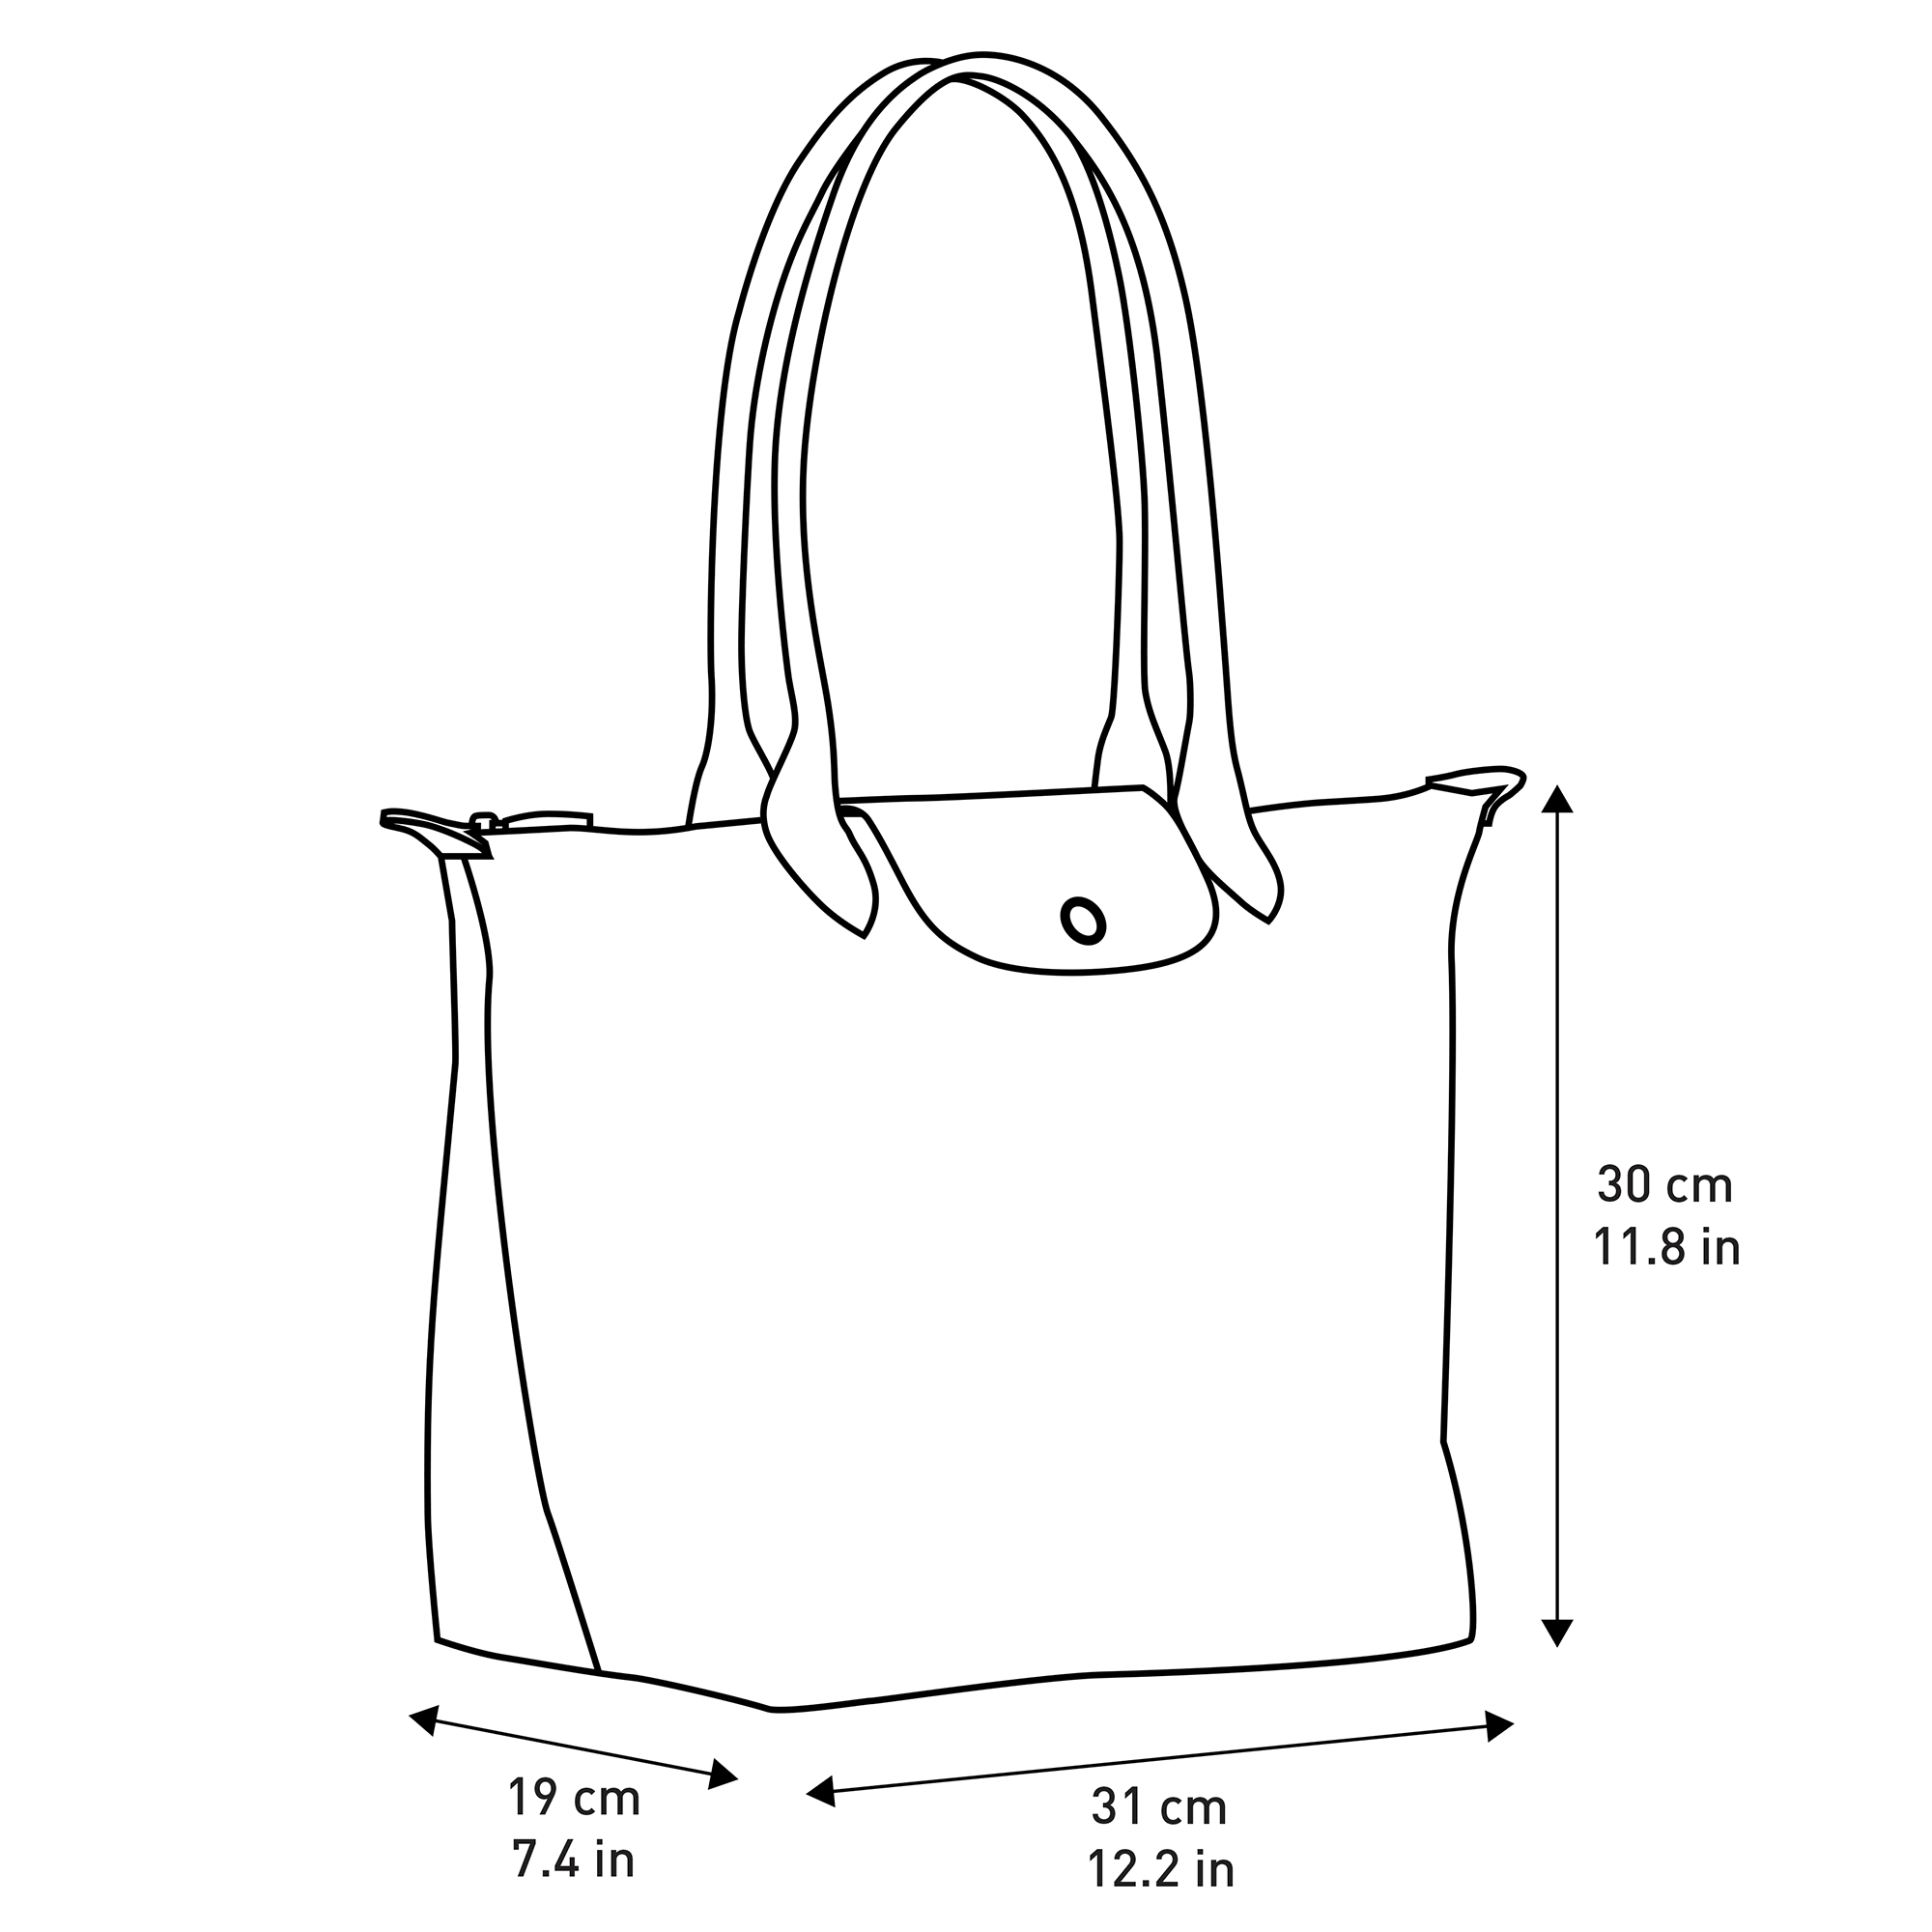 longchamp bag size chart